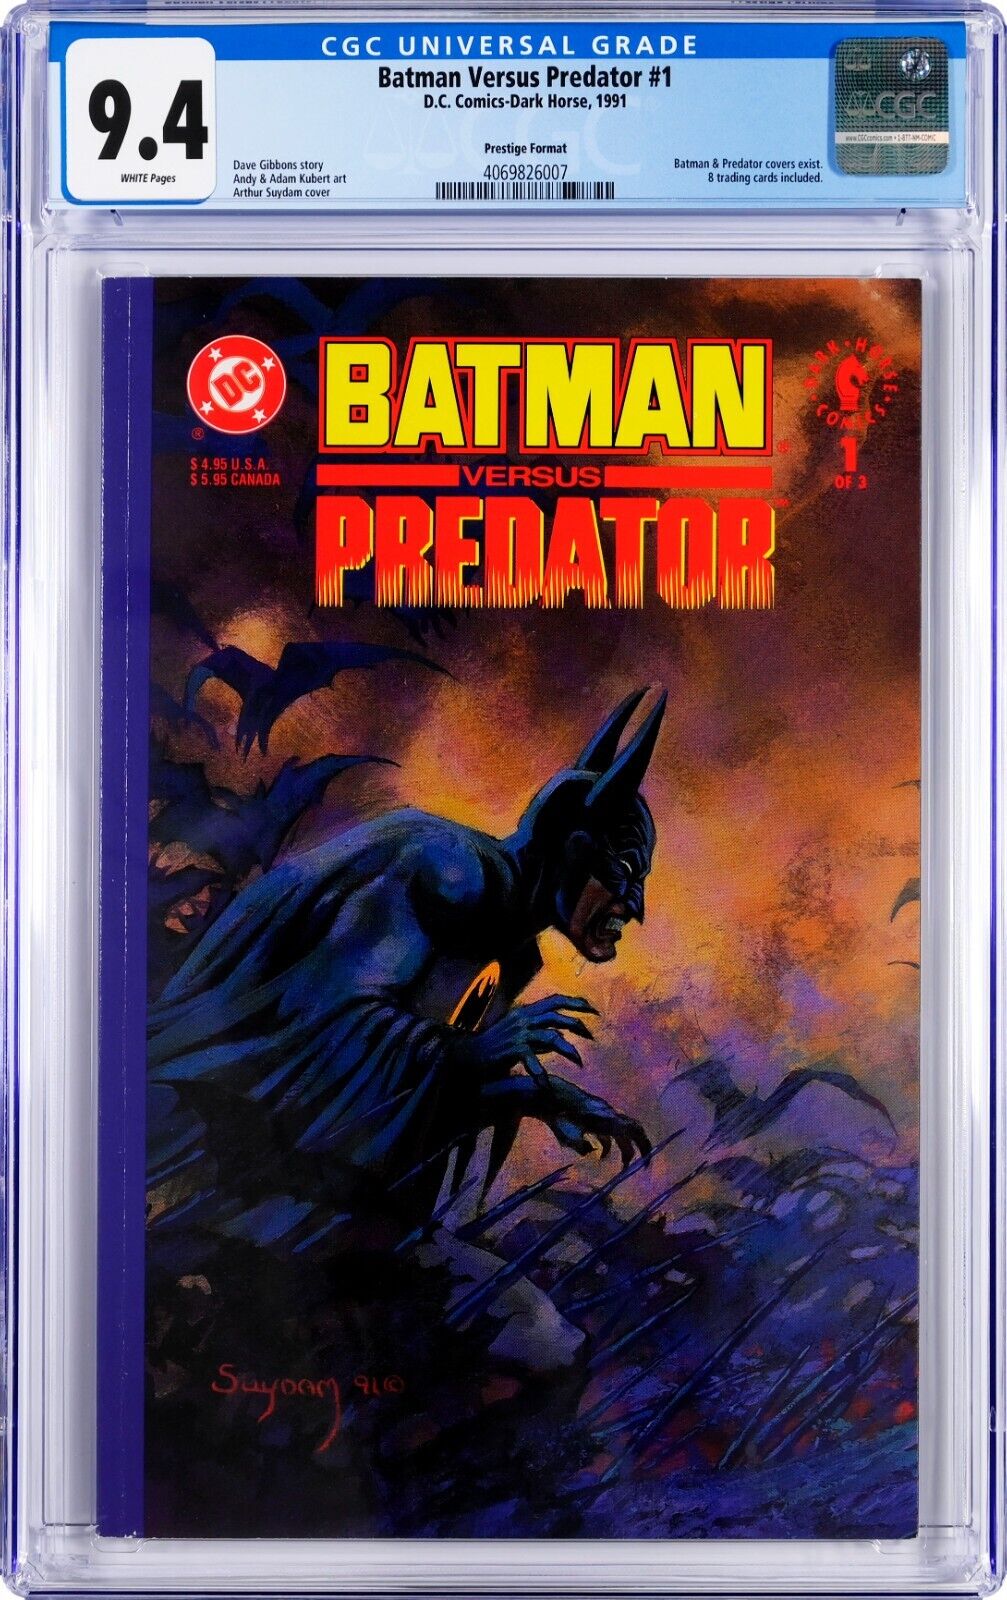 Batman Versus Predator #1 CGC 9.4 (1991, DC) Dave Gibbons Story, Suydam Cover